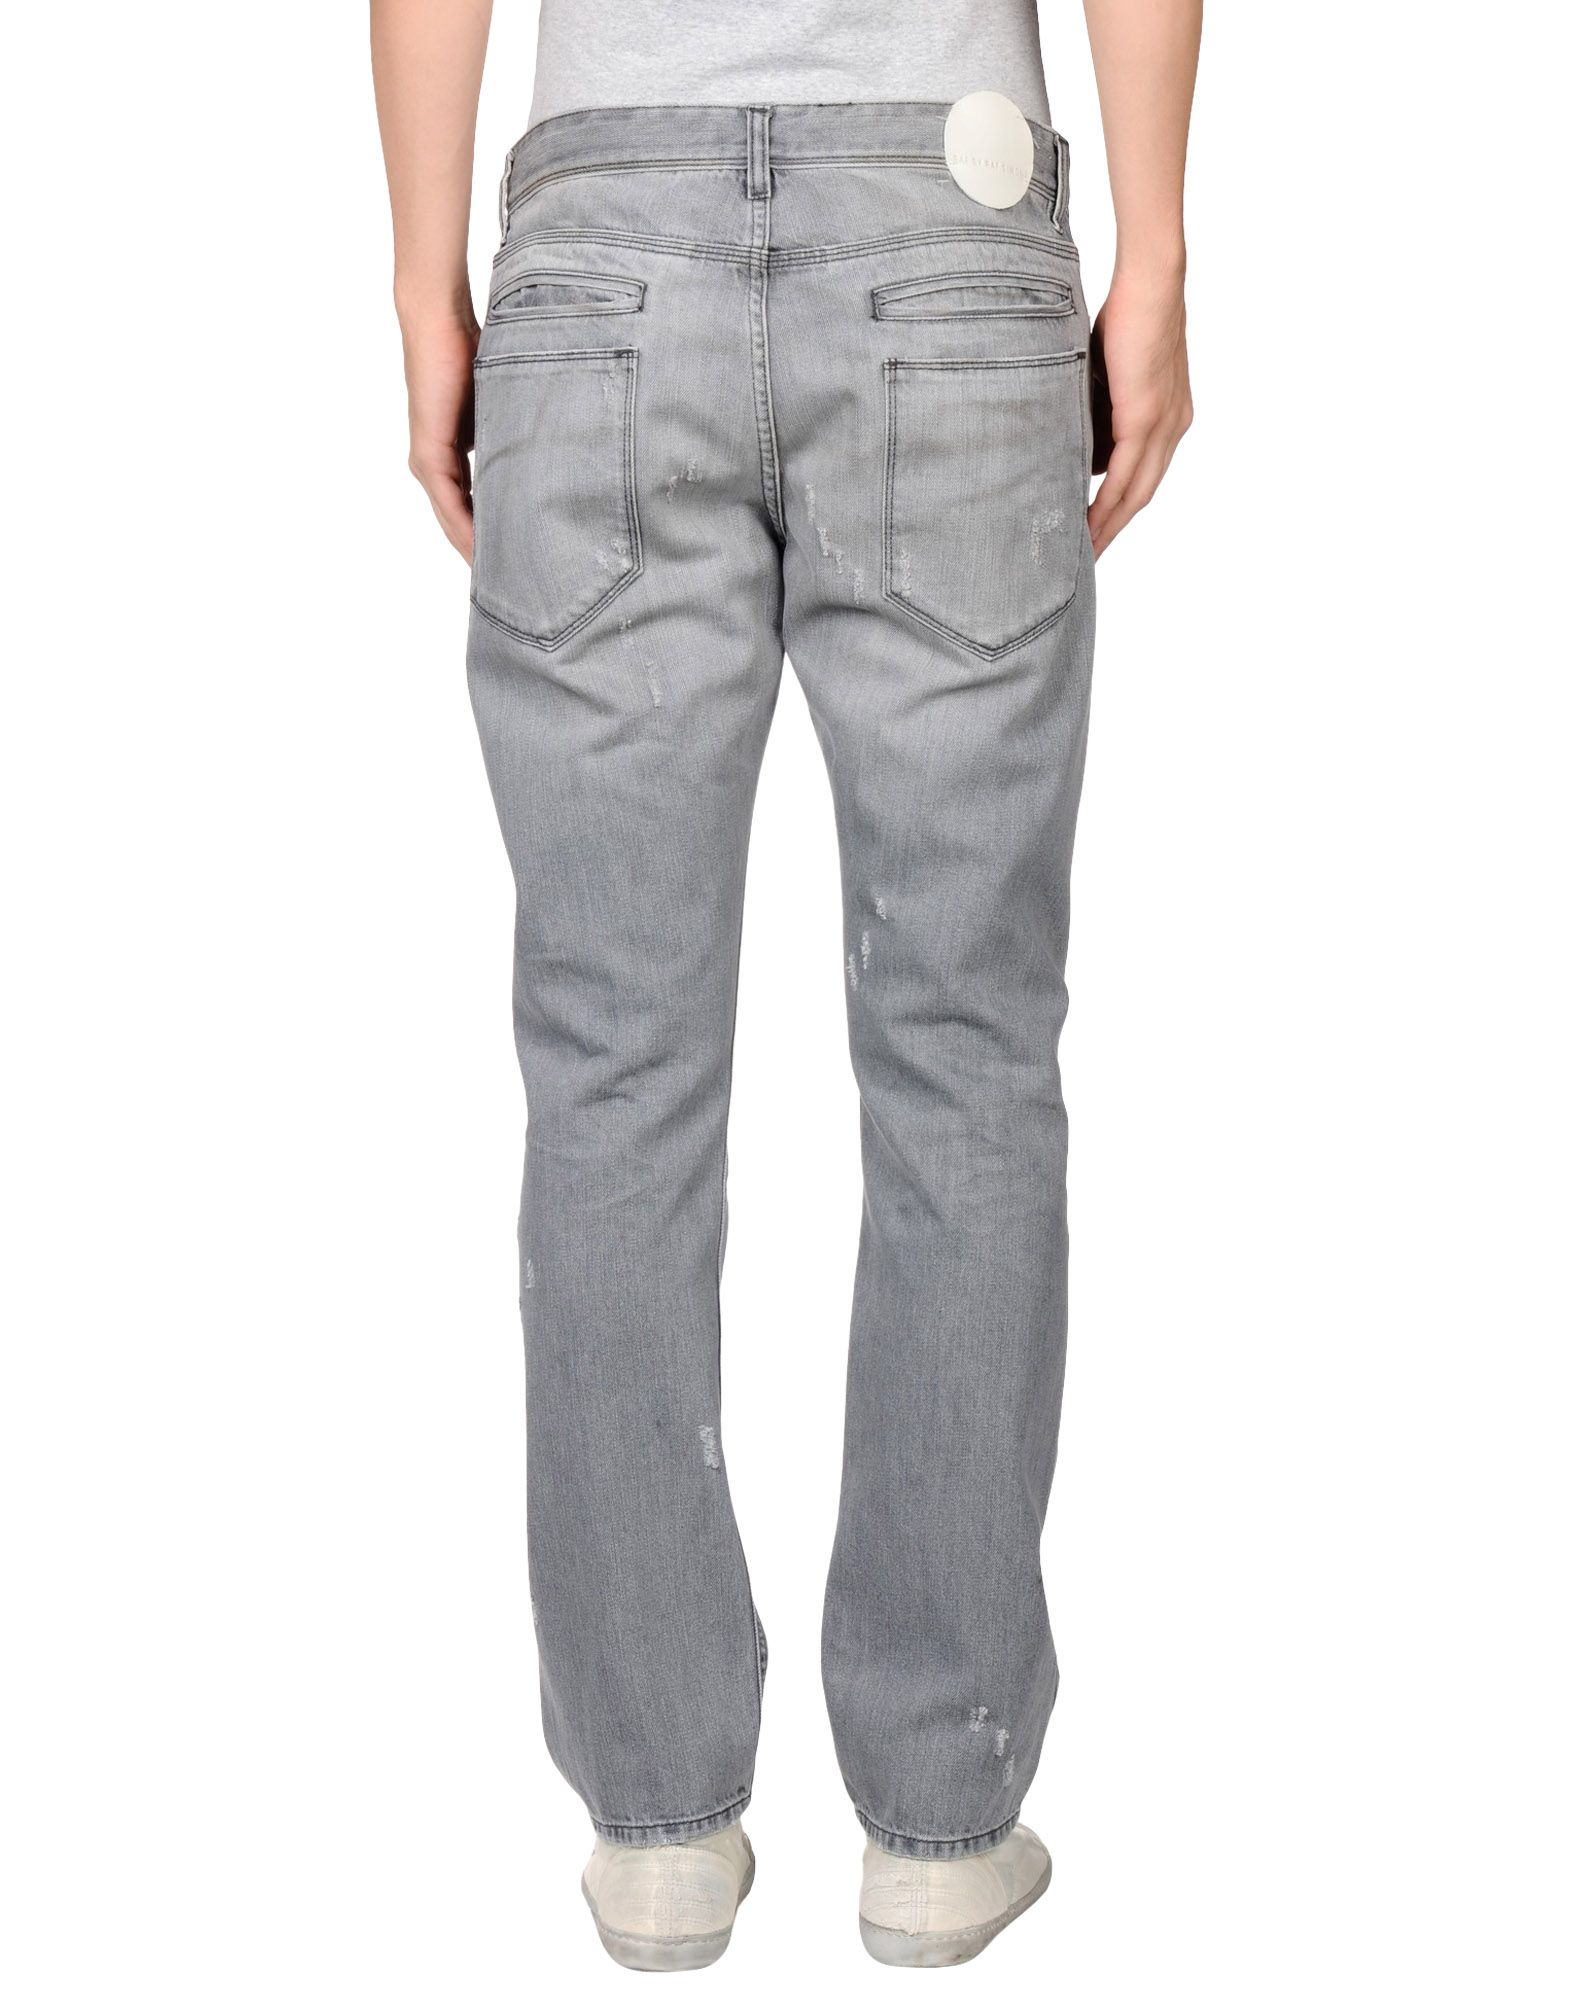 Raf Simons Denim Pants in Grey (Gray) for Men - Lyst